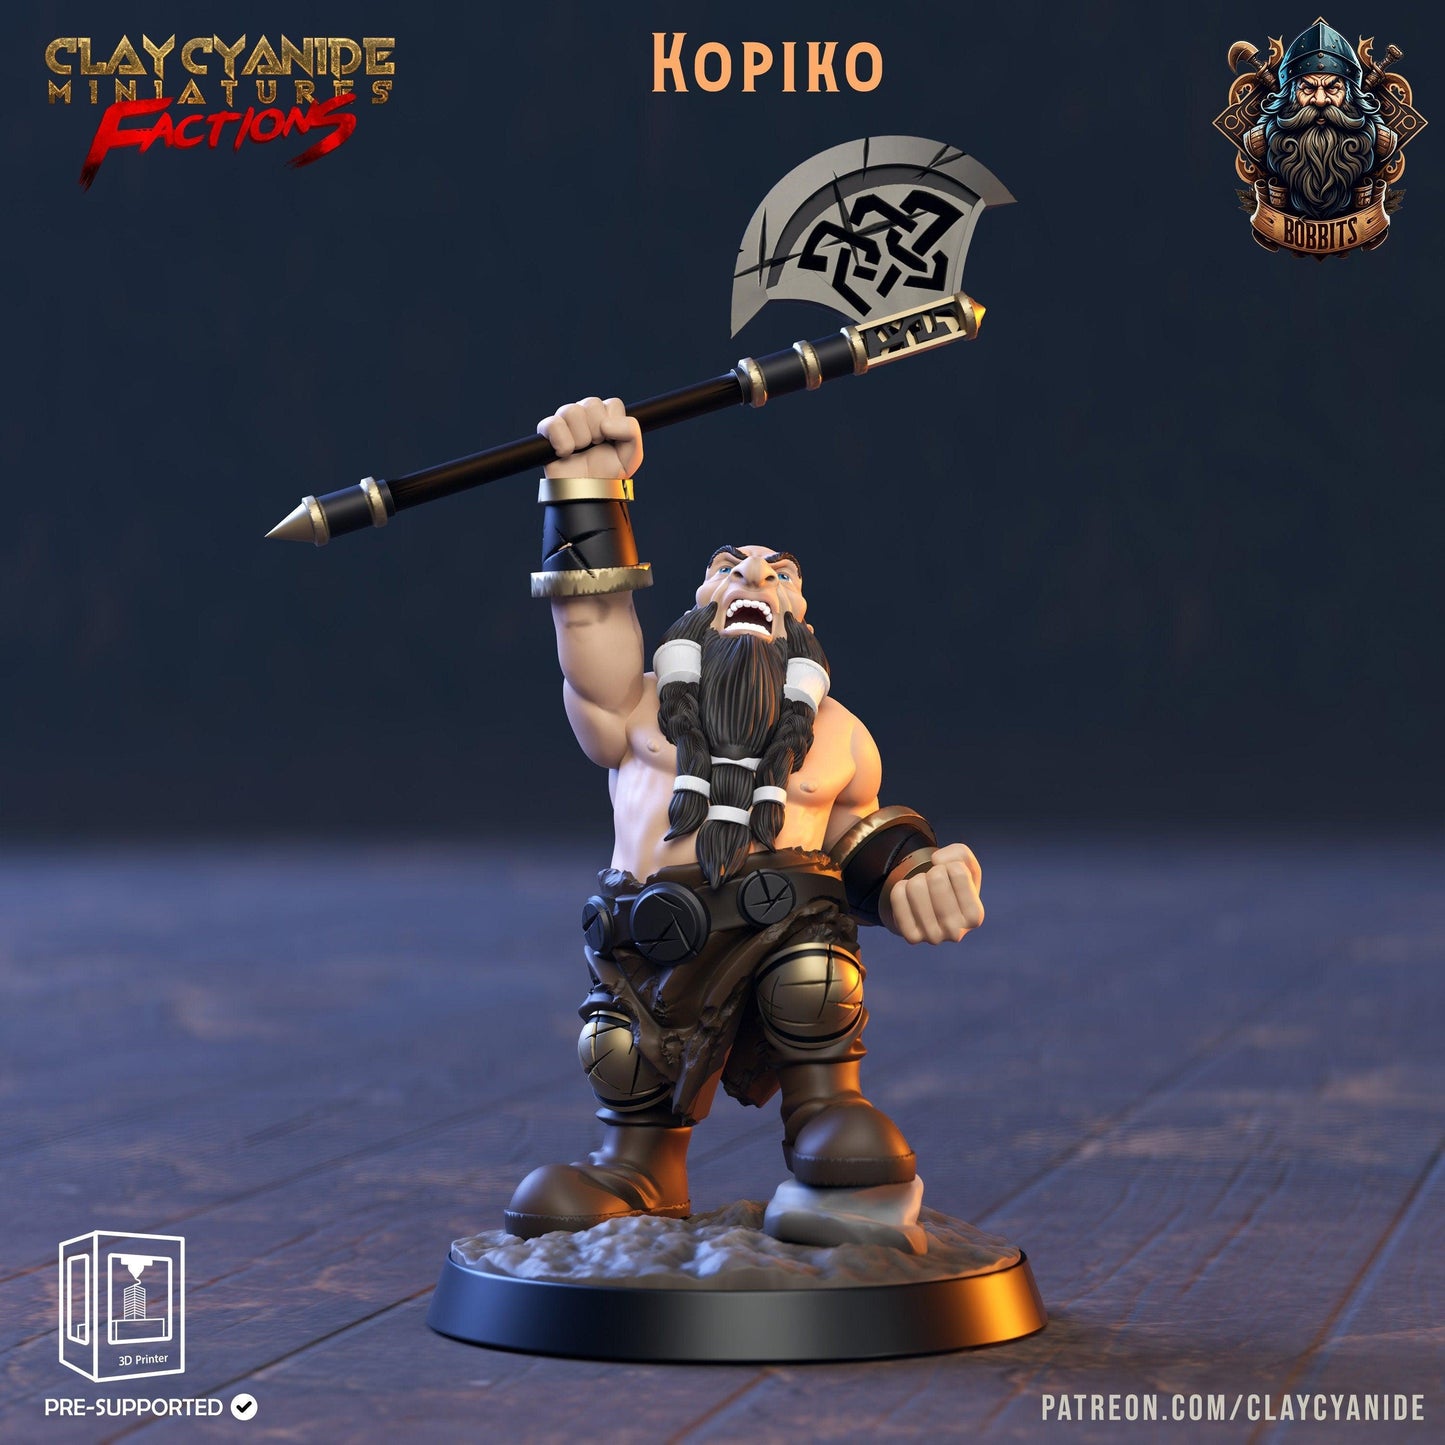 Kopiko DnD Miniature: Valiant Dwarf Warrior from The Bobbits Guild 32mm Scale - Plague Miniatures shop for DnD Miniatures